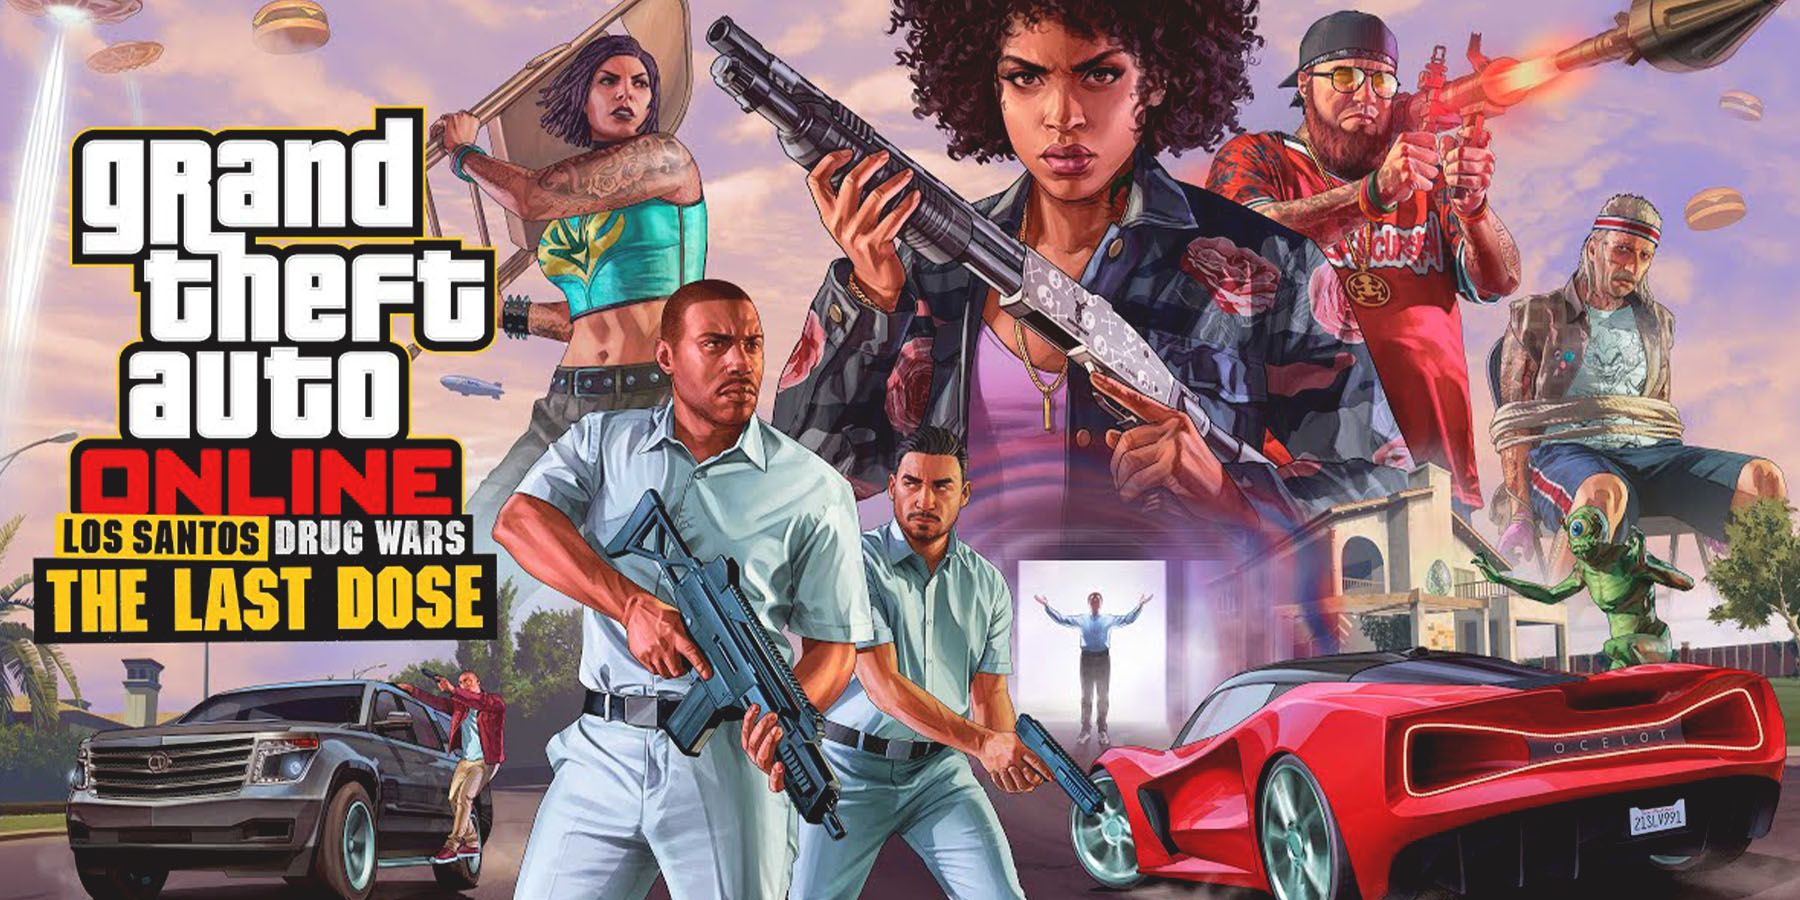 Grand Theft Auto Online Lost Santos Drug Wars The Last Dose DLC official artwork